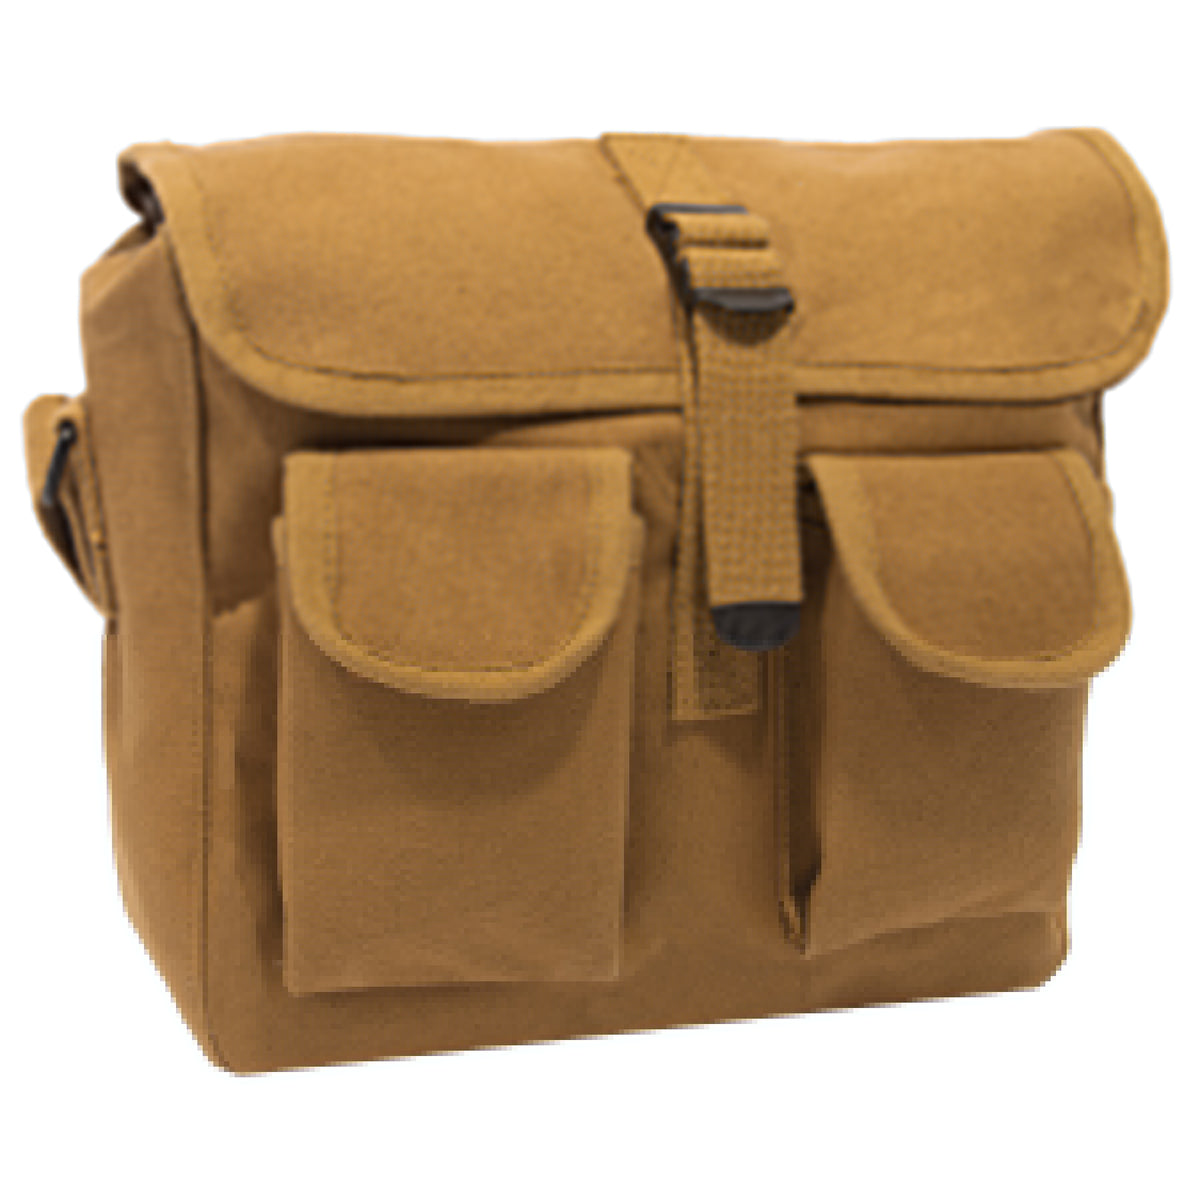 Rothco Two-Tone Canvas Duffle Bag With Brown Bottom